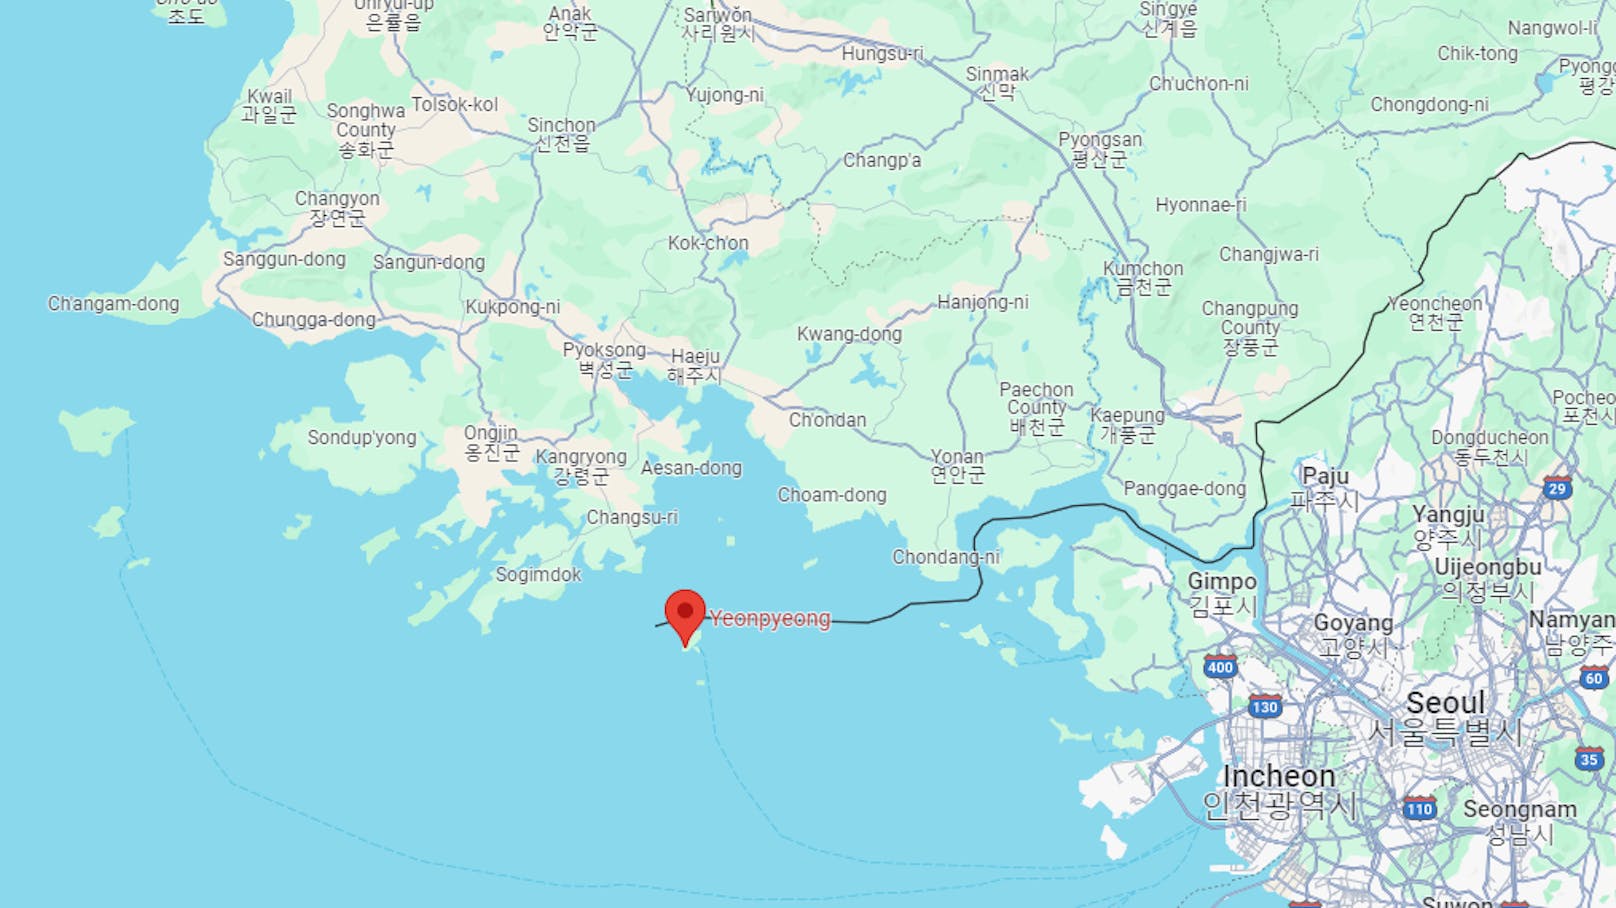 Nordkorea feuert Granaten ab – Südkorea evakuiert Insel